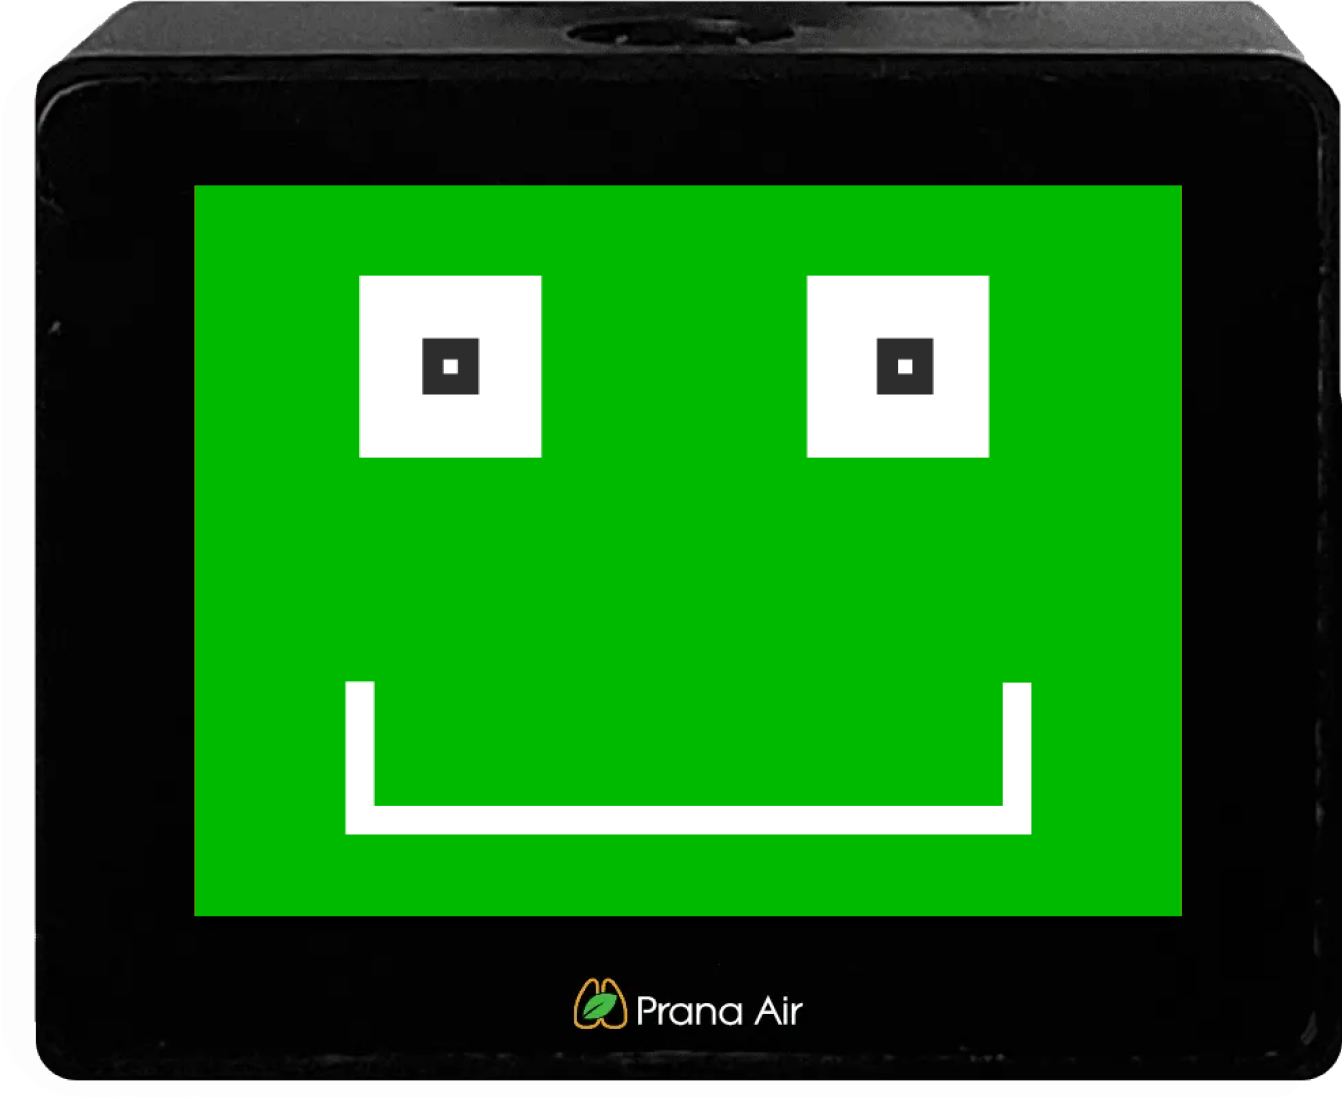 prana air co2 monitor face screen